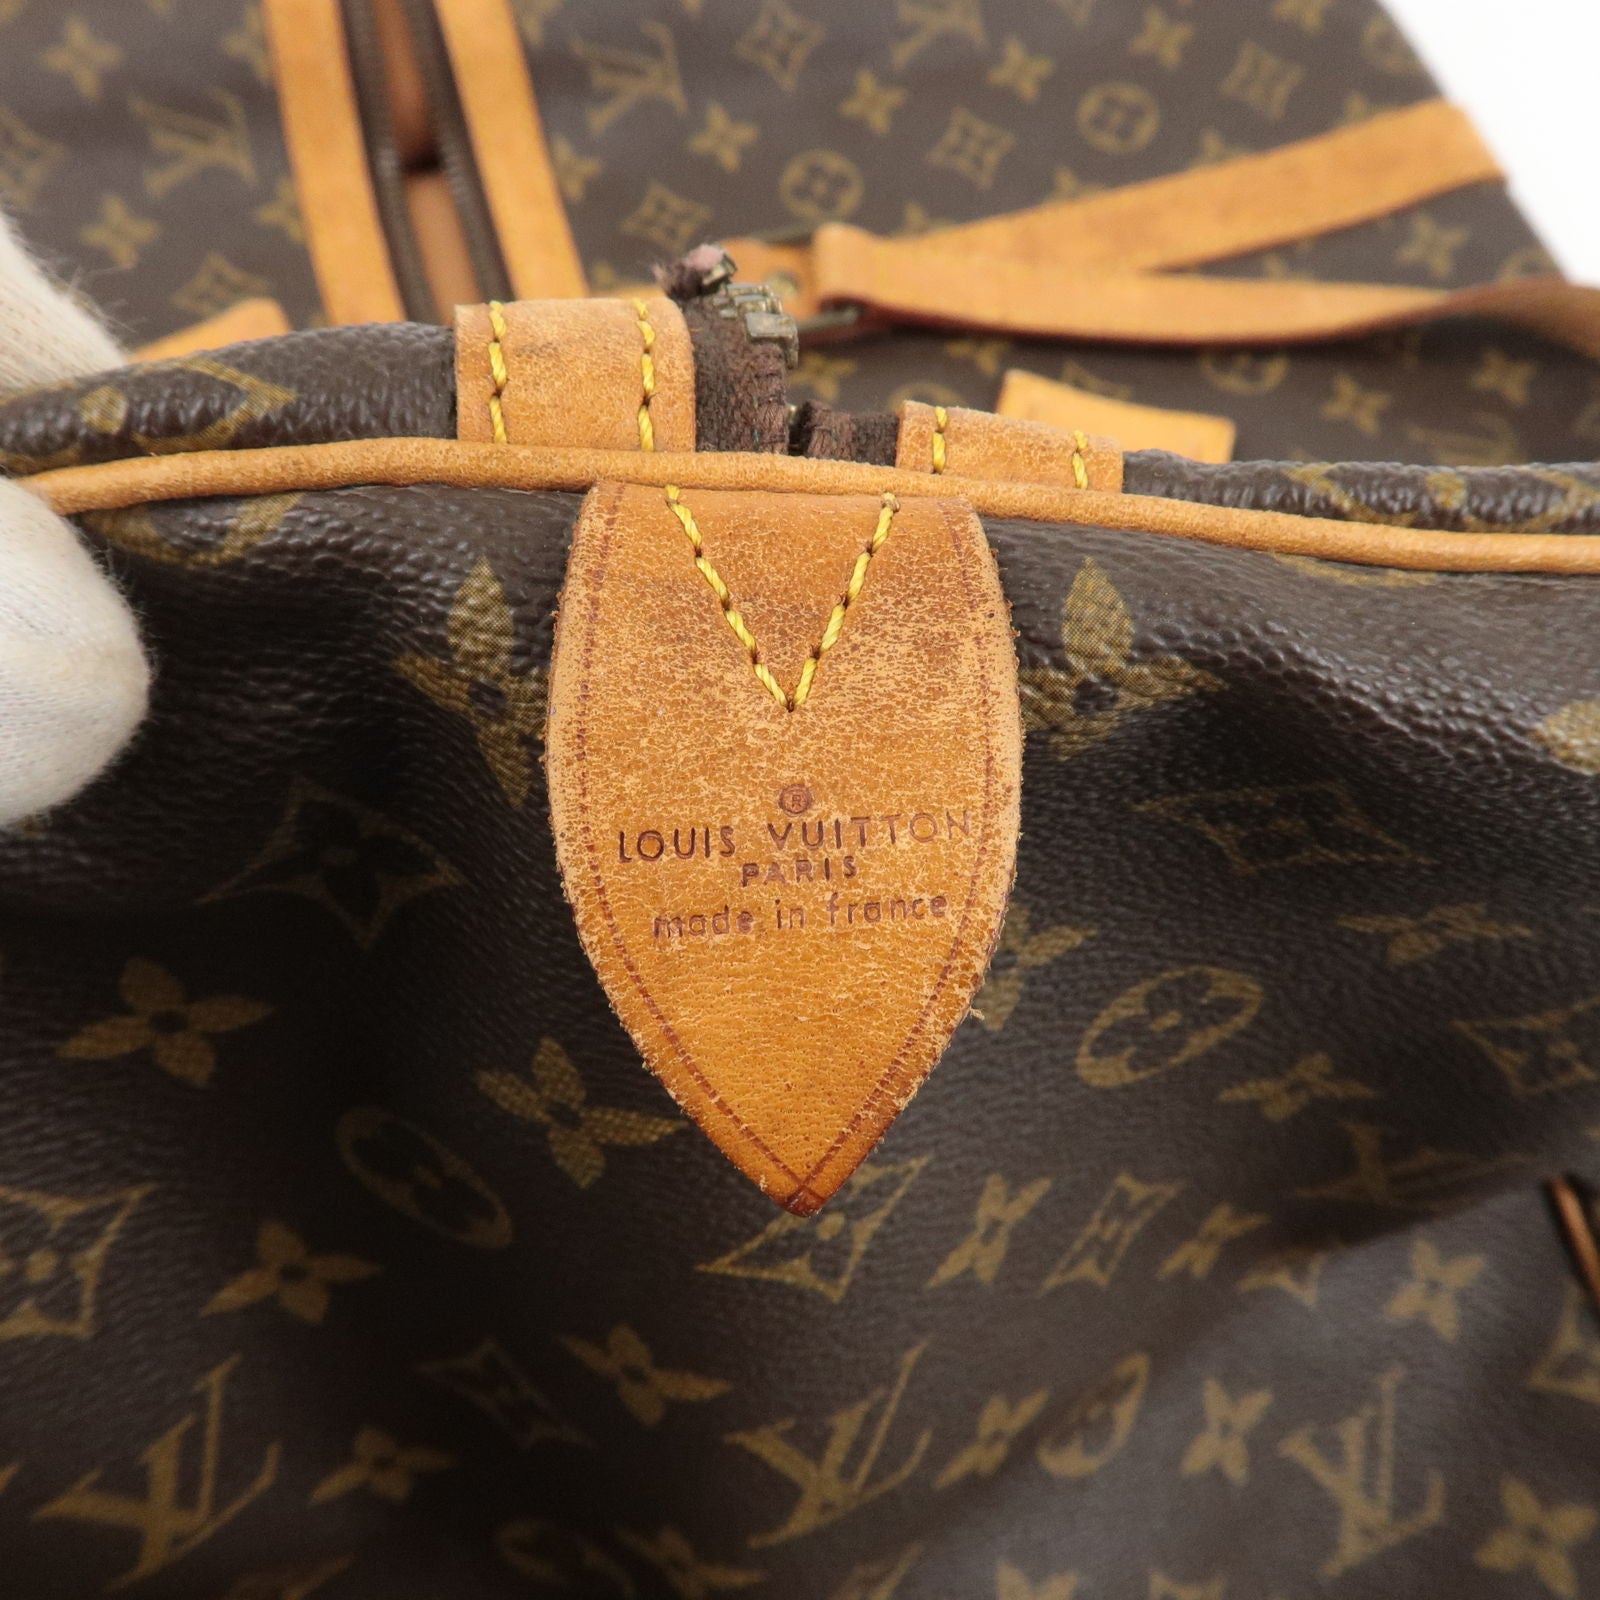 Pin on Louis Vuitton bags